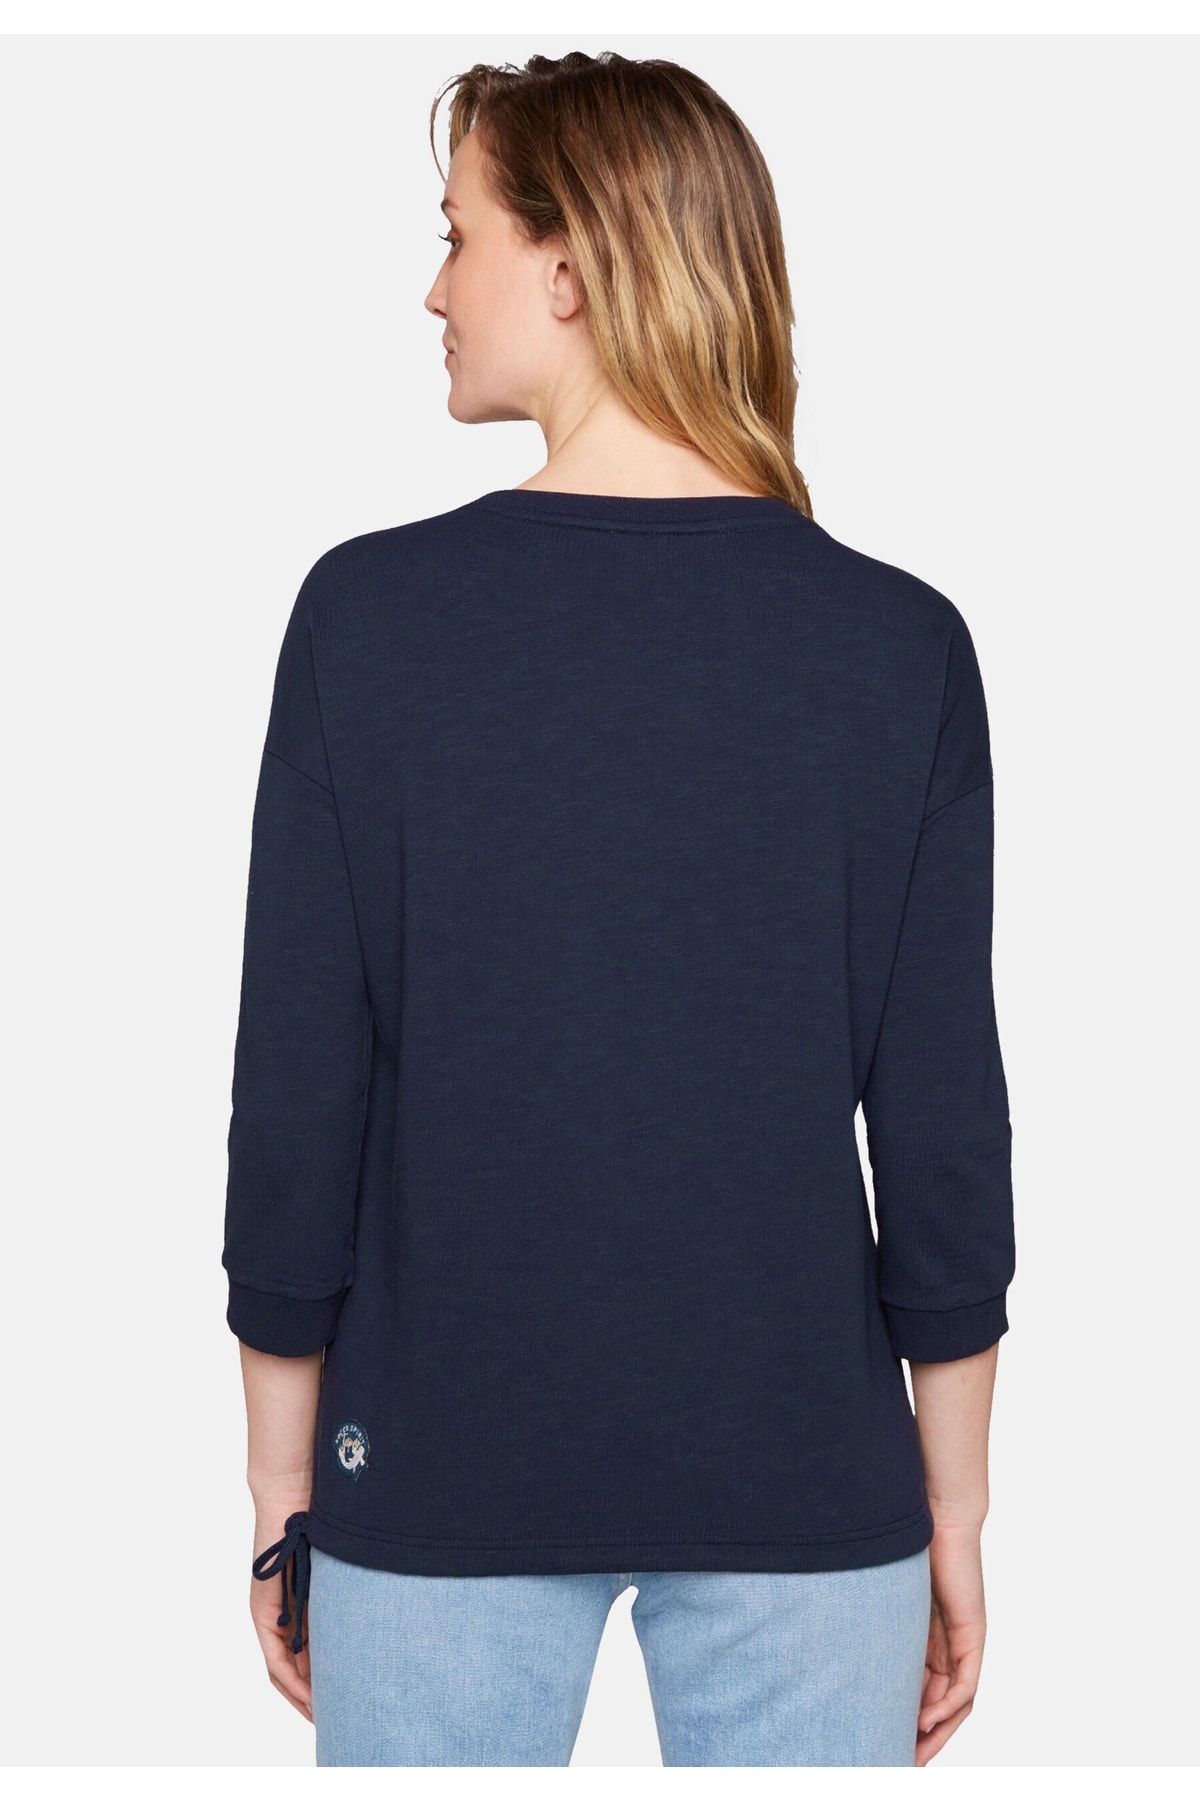 Soccx Sweatshirt - - Regular Trendyol - Dunkelblau Fit